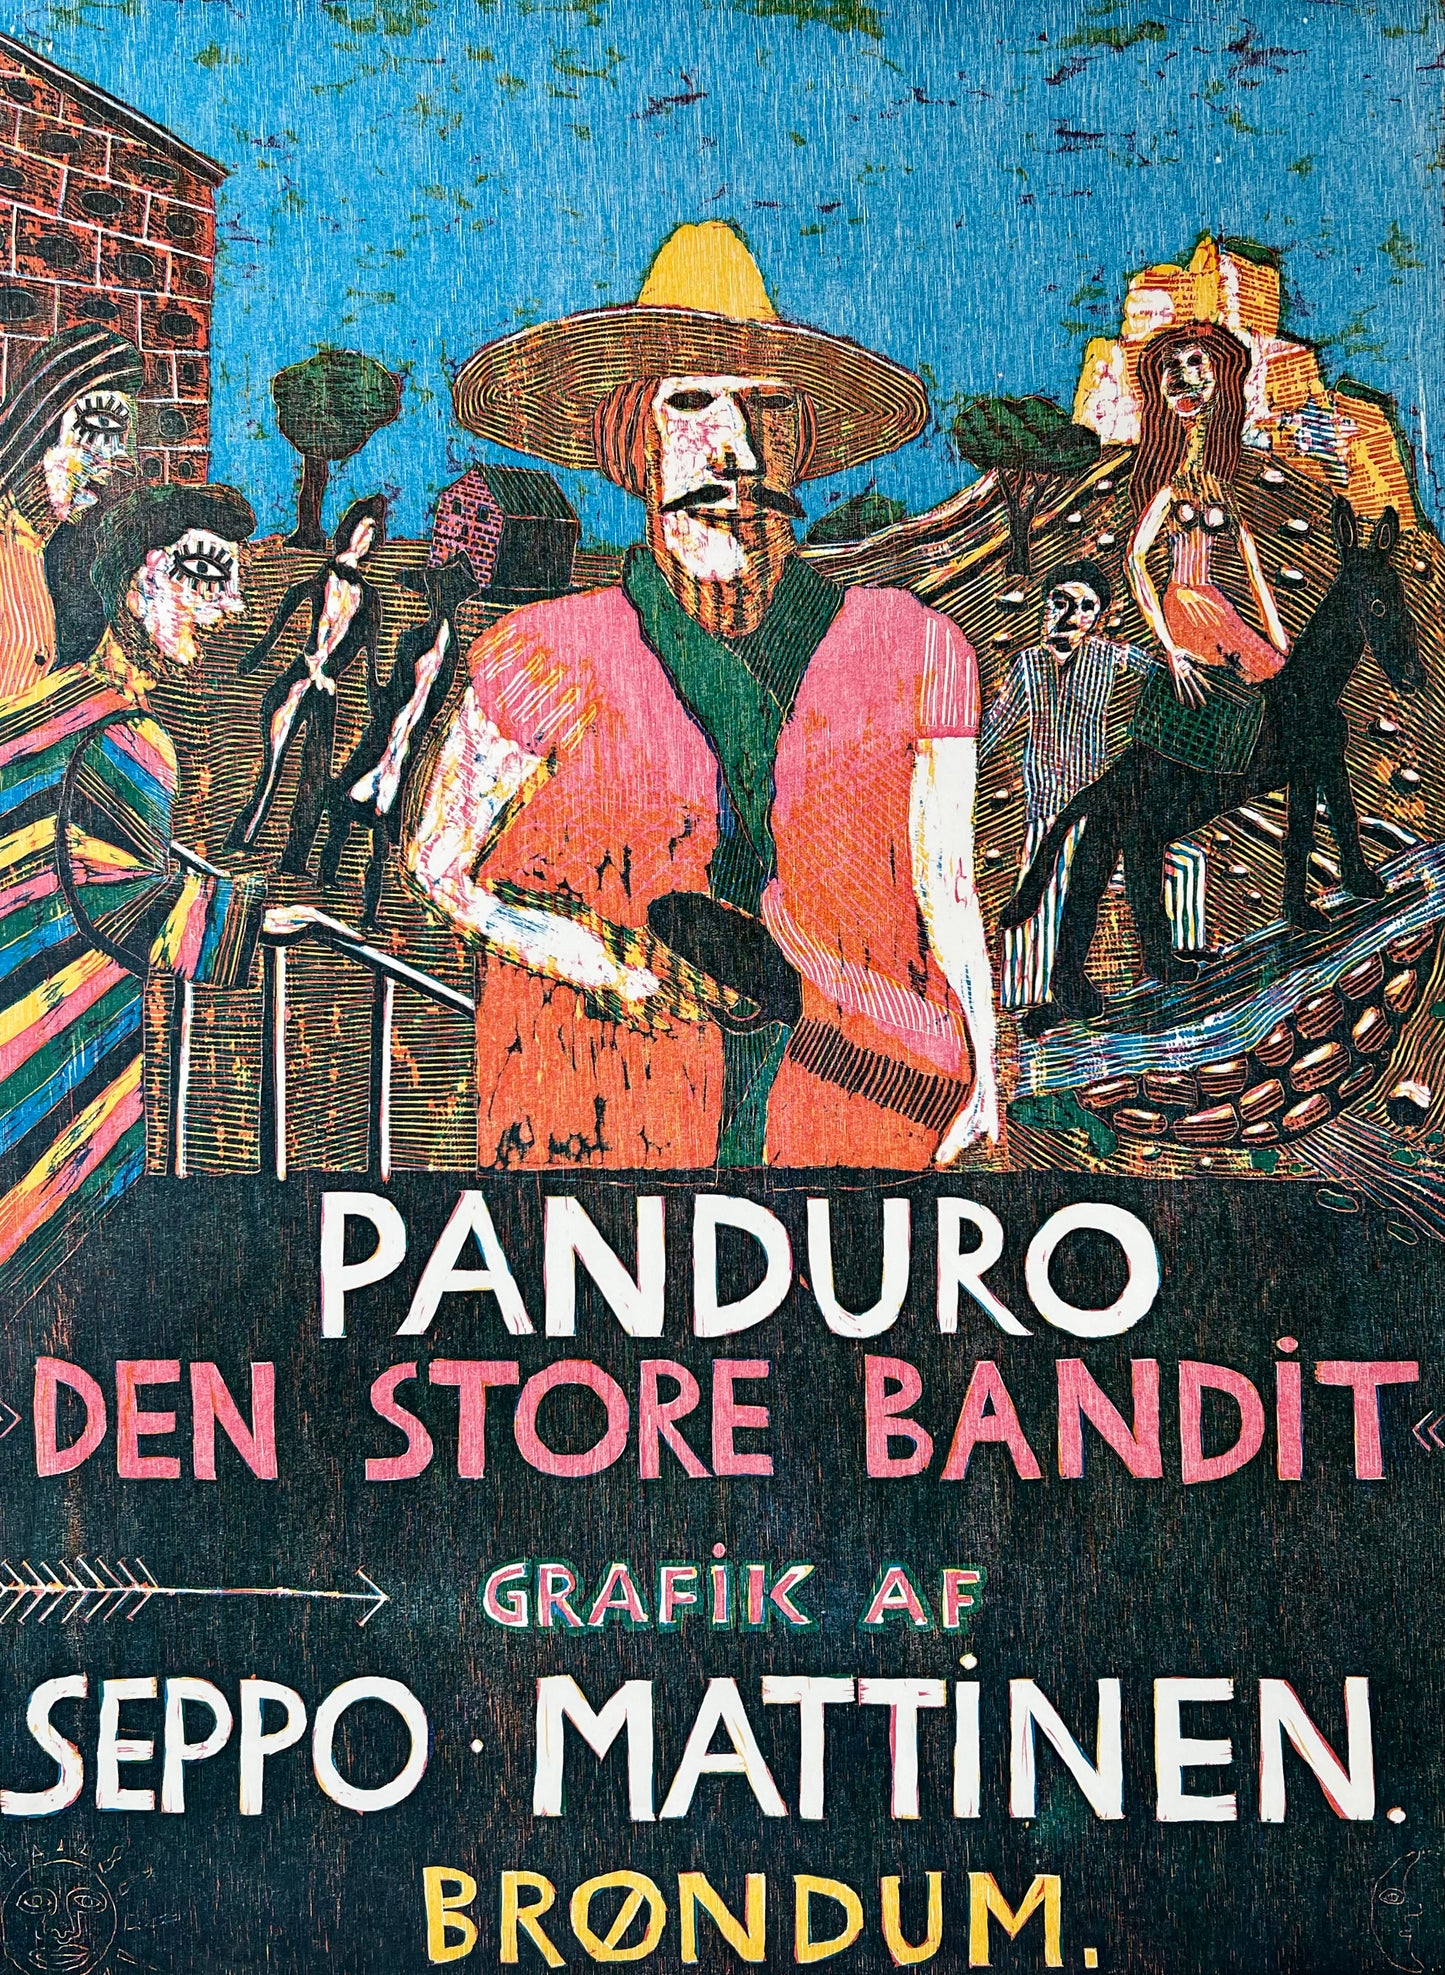 Seppo Mattinen. “Panduro den store bandit”, 1973